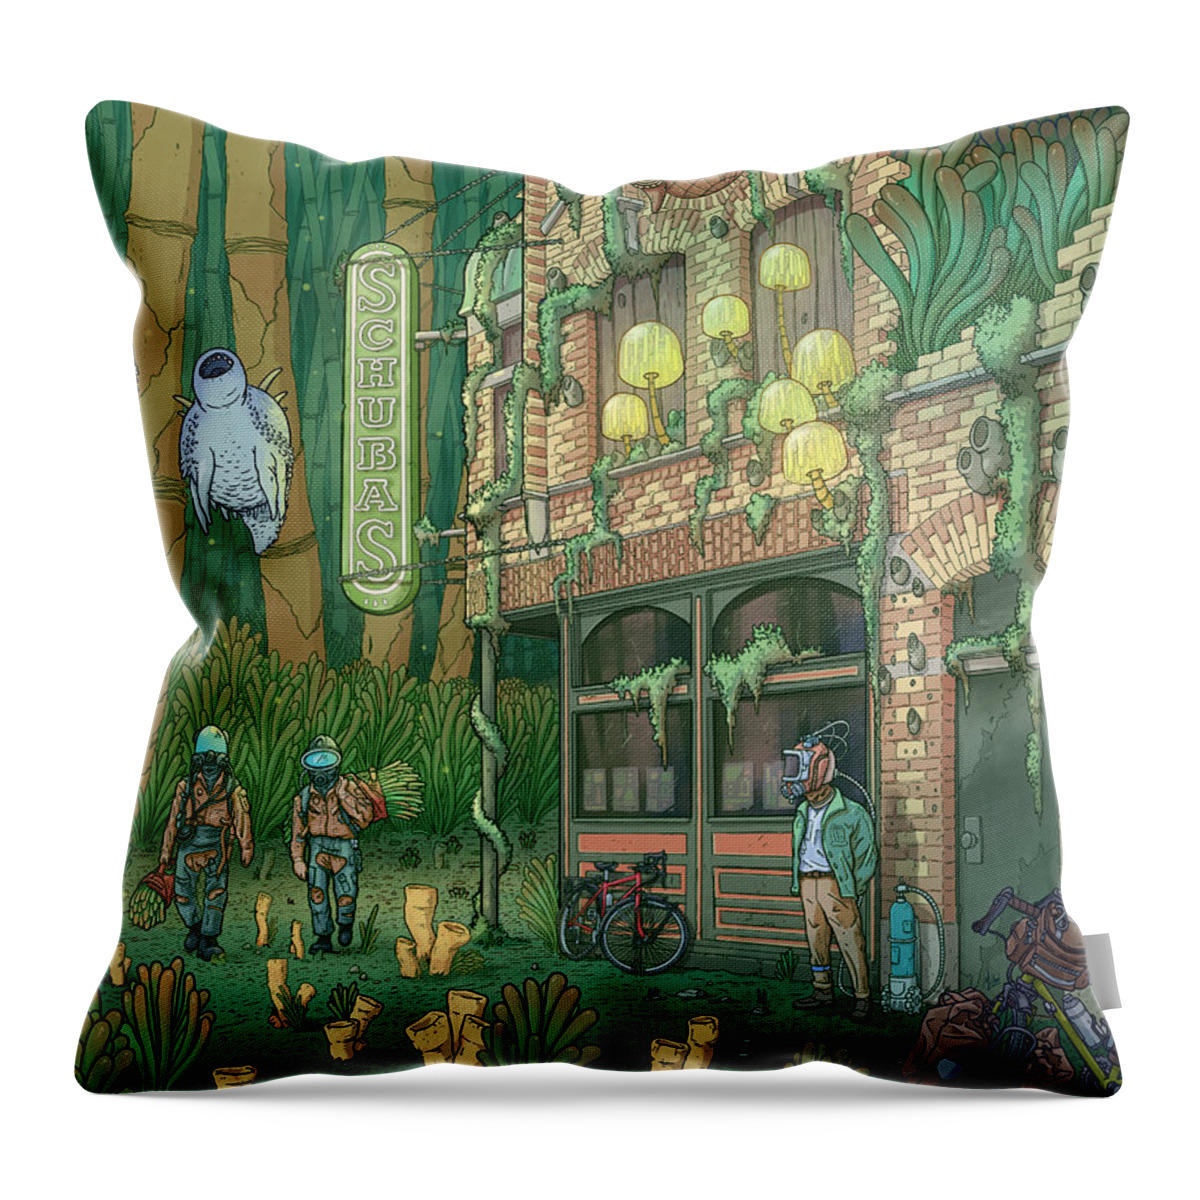 Illustration Throw Pillow featuring the digital art Schubas Tied House by EvanArt - Evan Miller